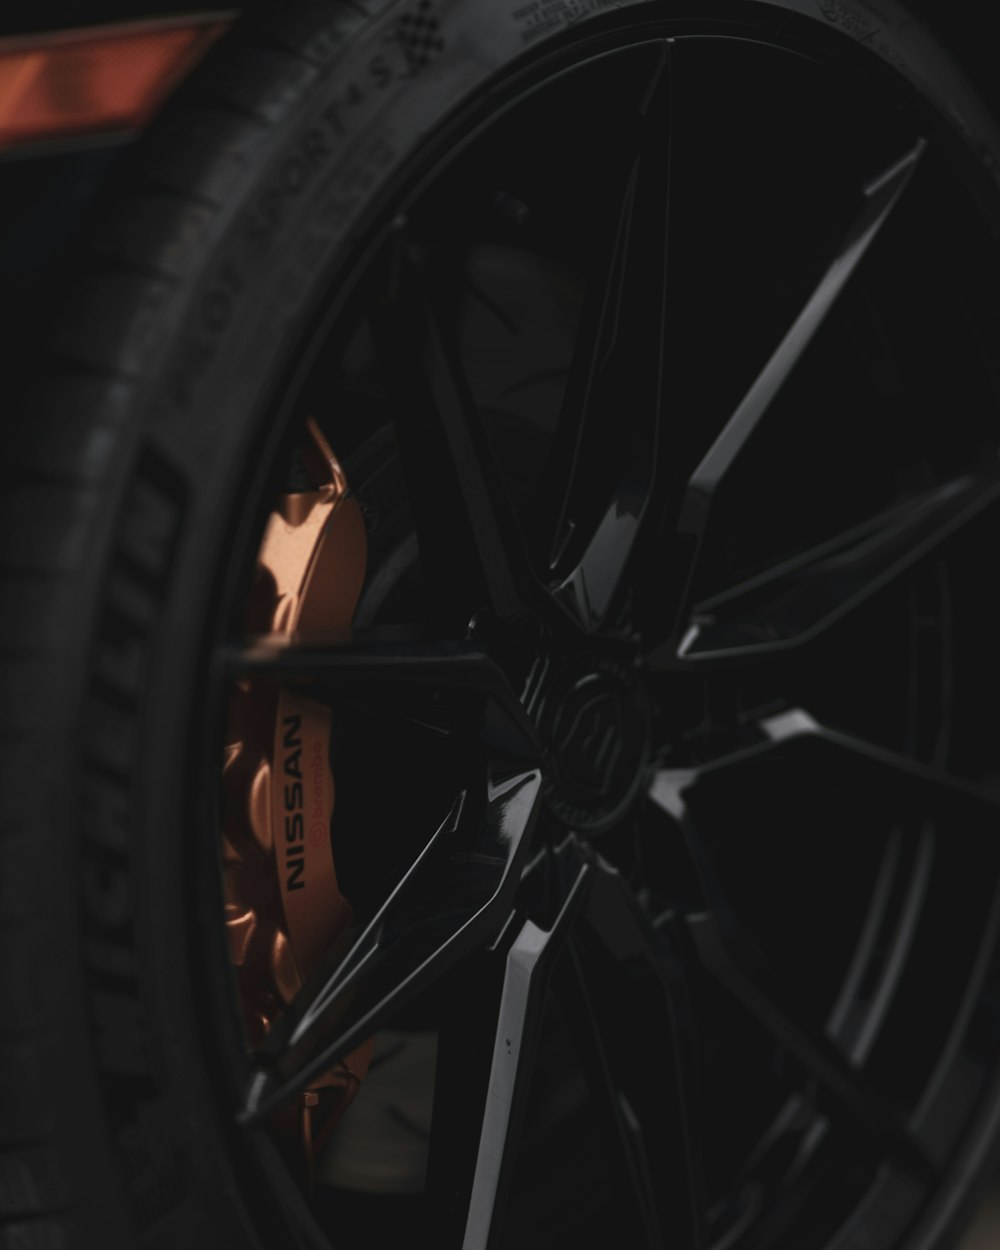 black wheel with tire on orange and black textile